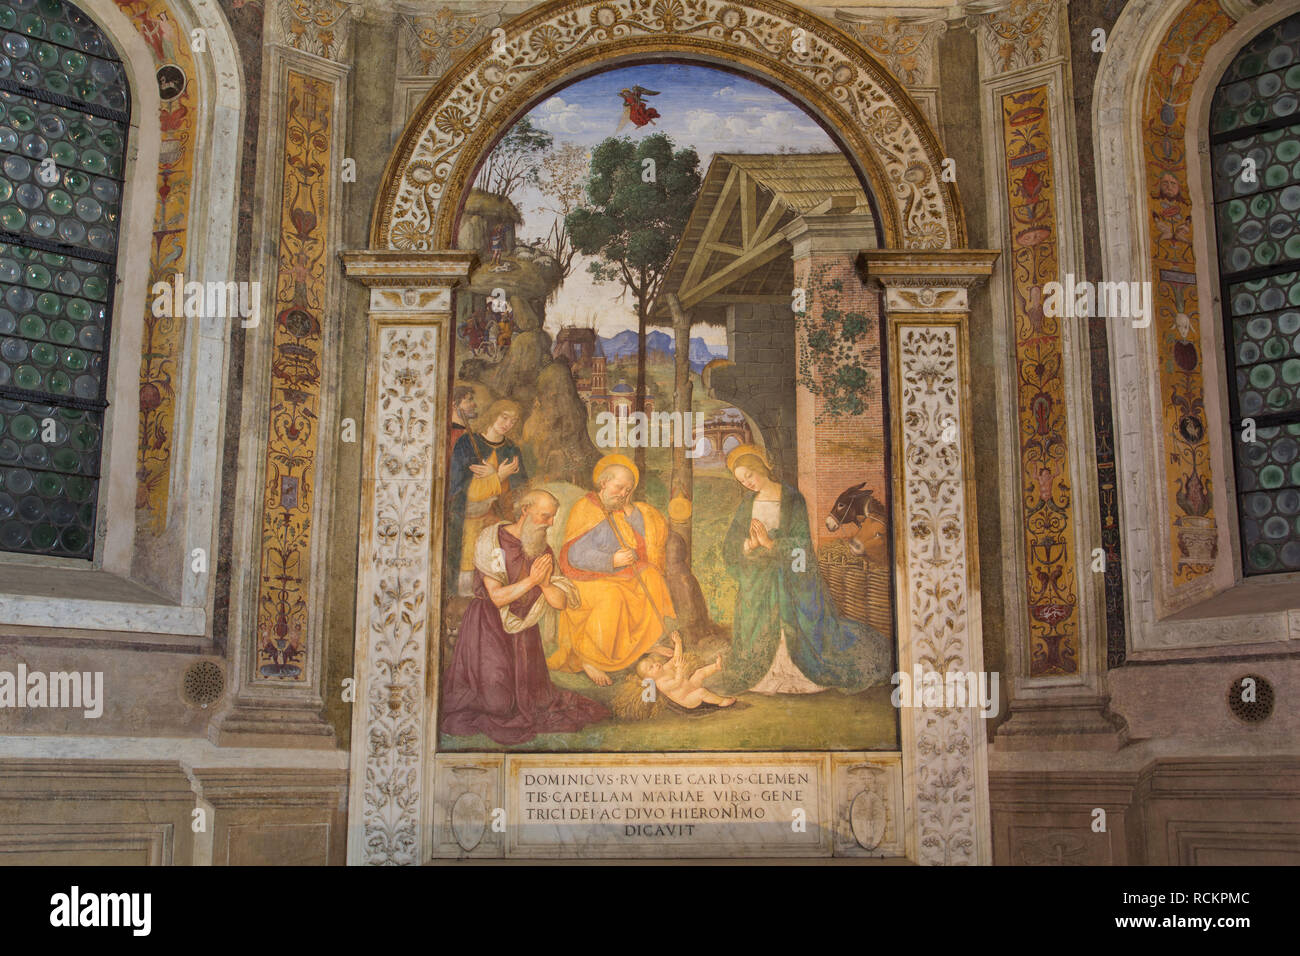 Die Anbetung des Kindes mit St. Jerome - Krippe (von Pinturicchio, 1490) - Della Rovere Kapelle, Santa Maria del Popolo - Rom Stockfoto